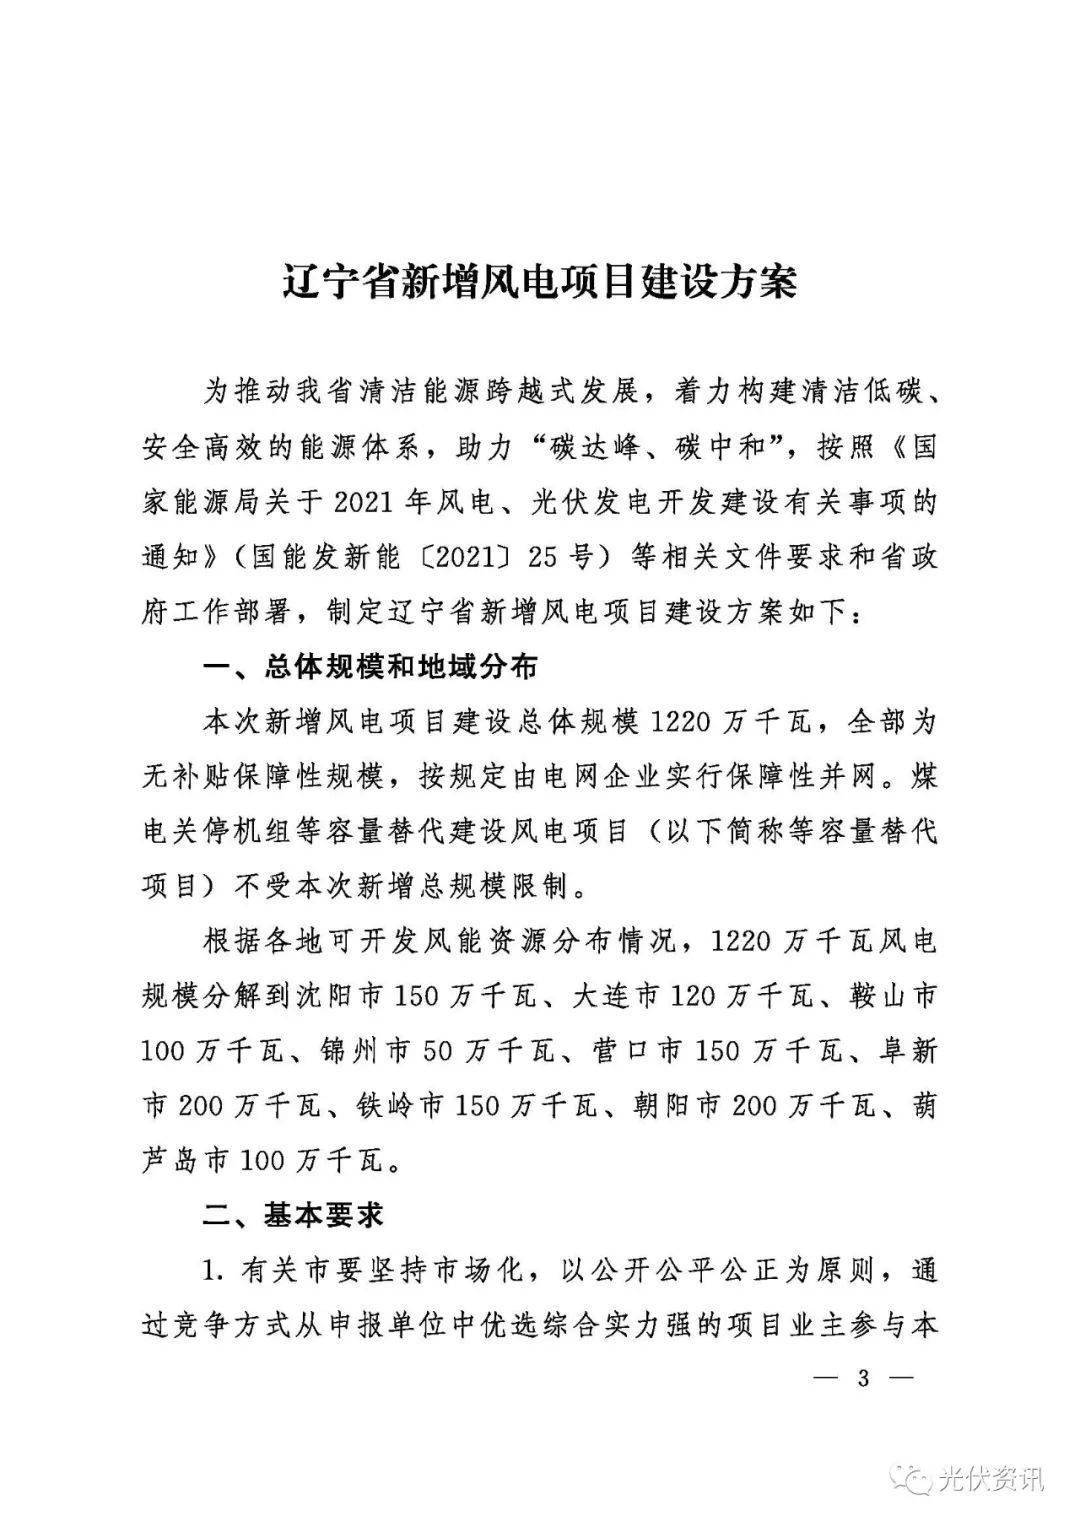 122gw无补贴辽宁省新增风电项目建设方案